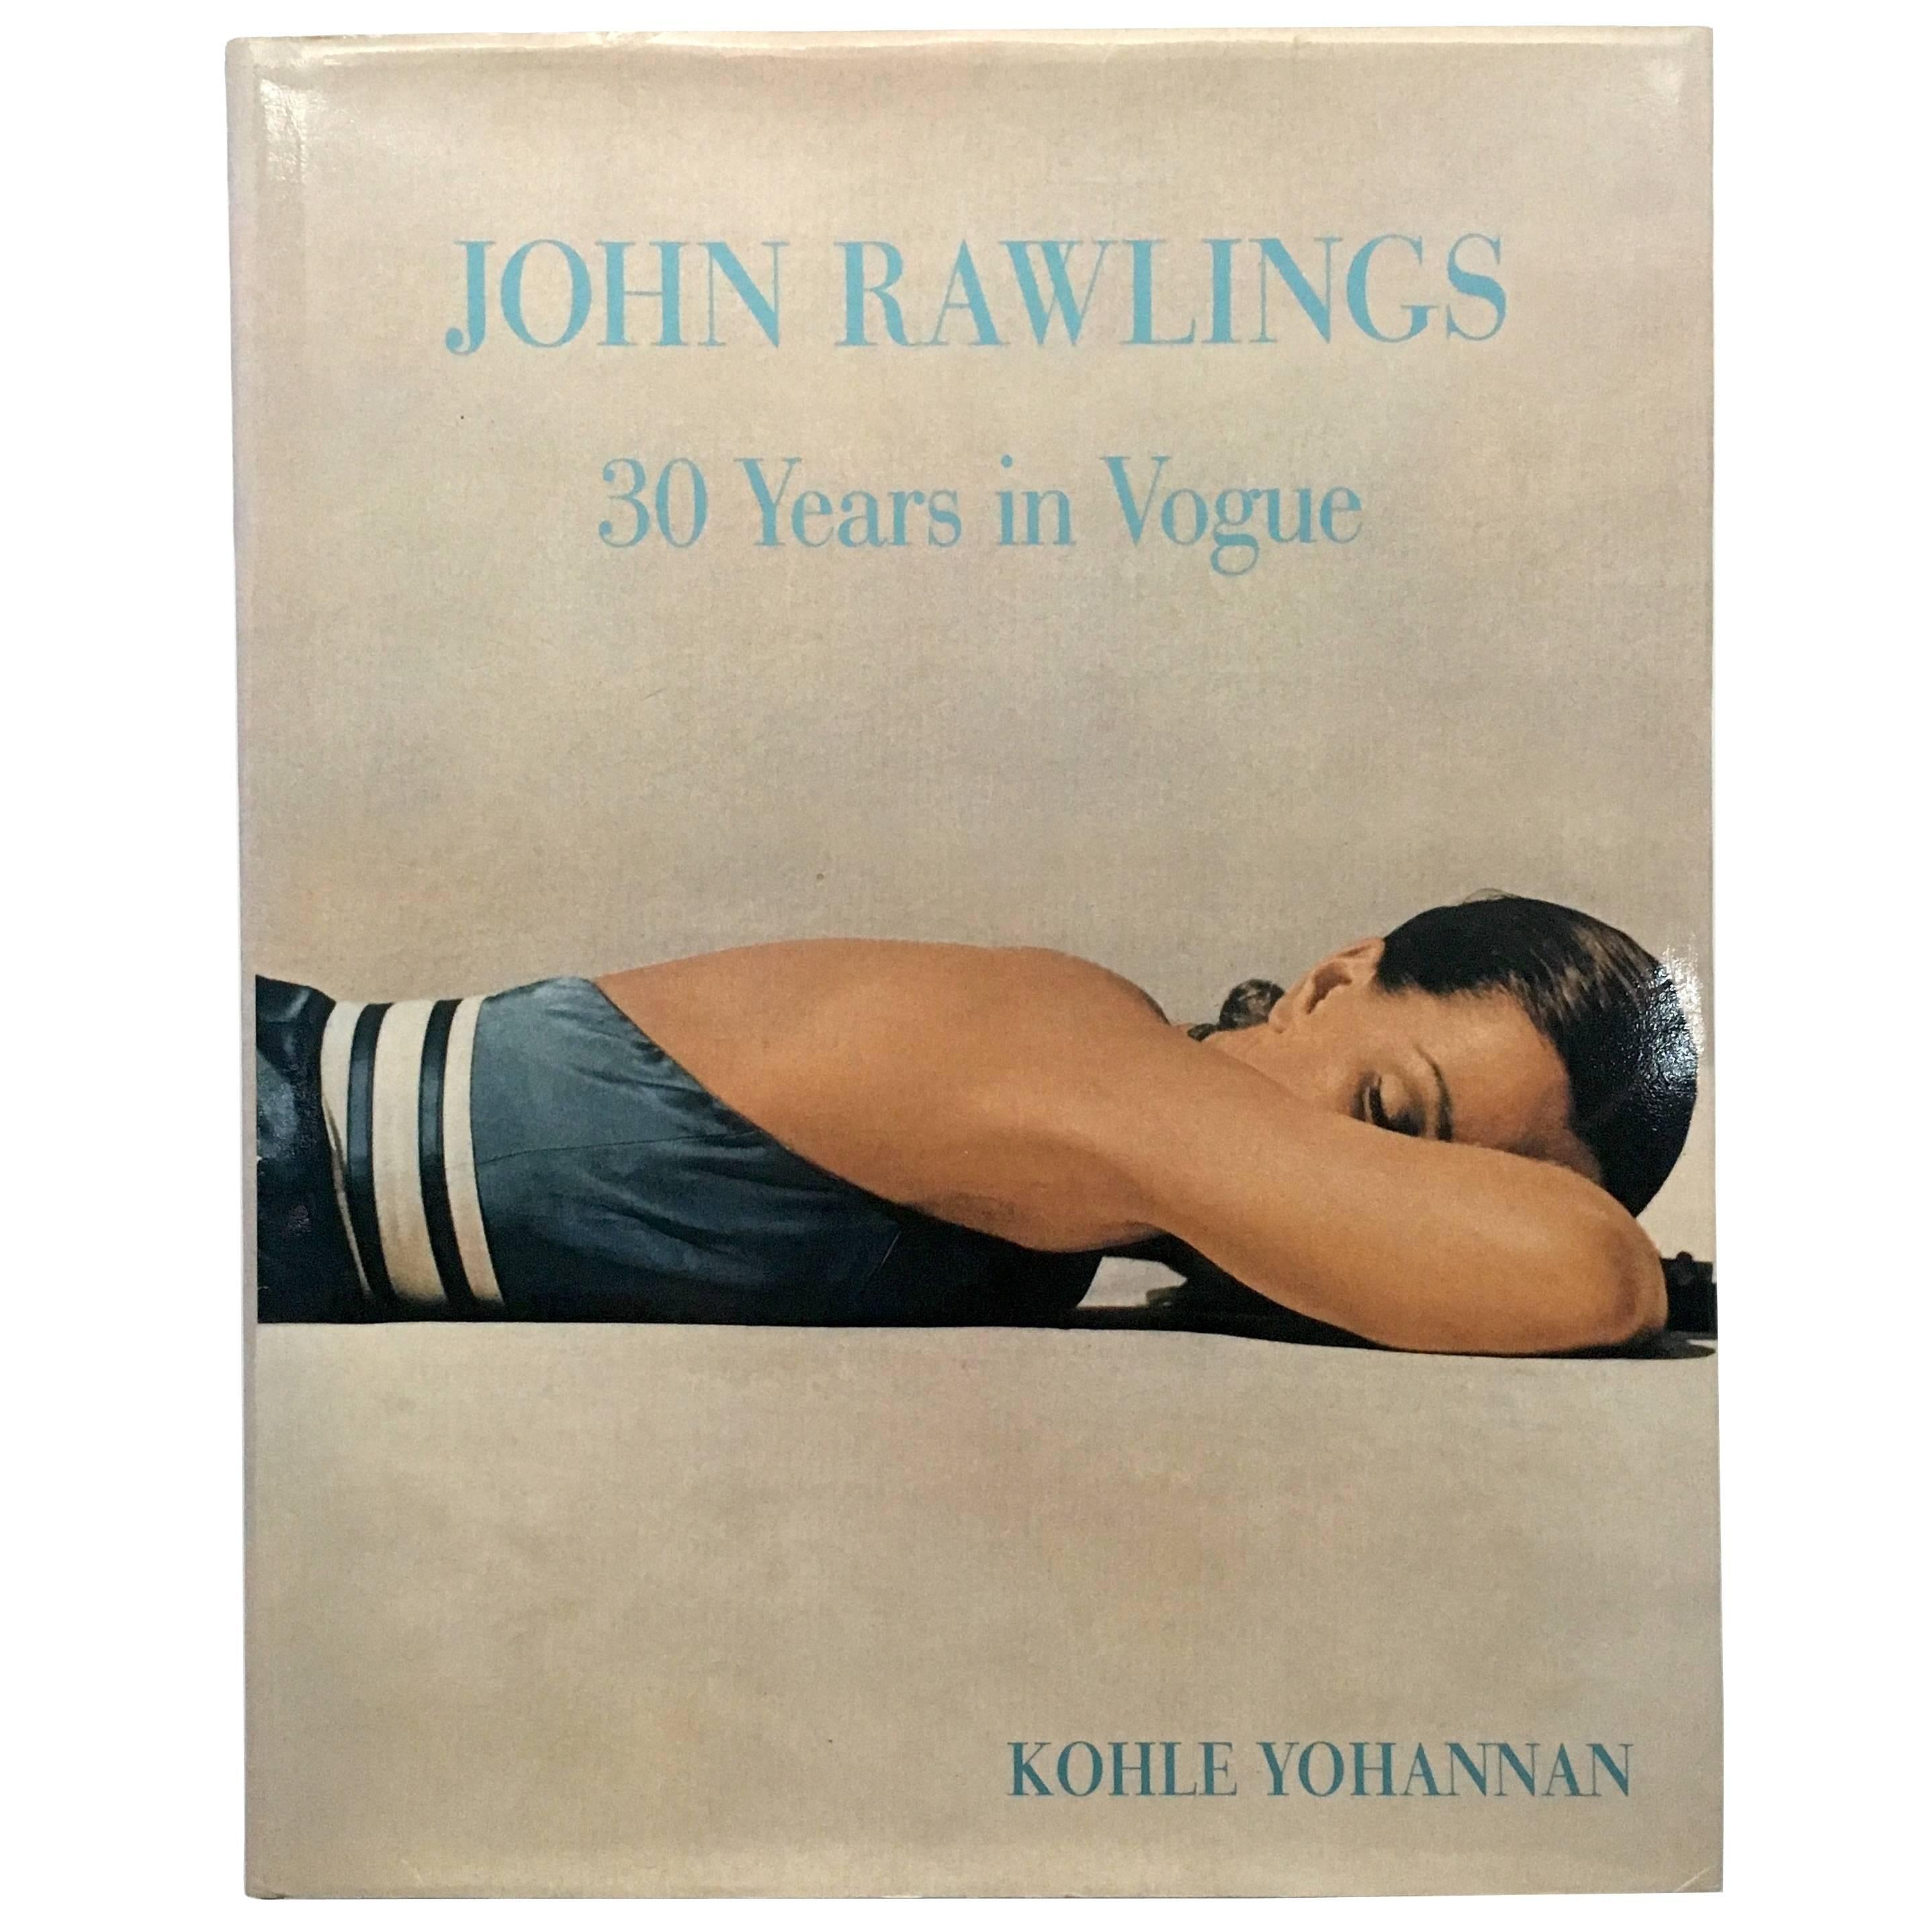 "John Rawlings - 30 Years in Vogue - Kohle Yohannan" Book